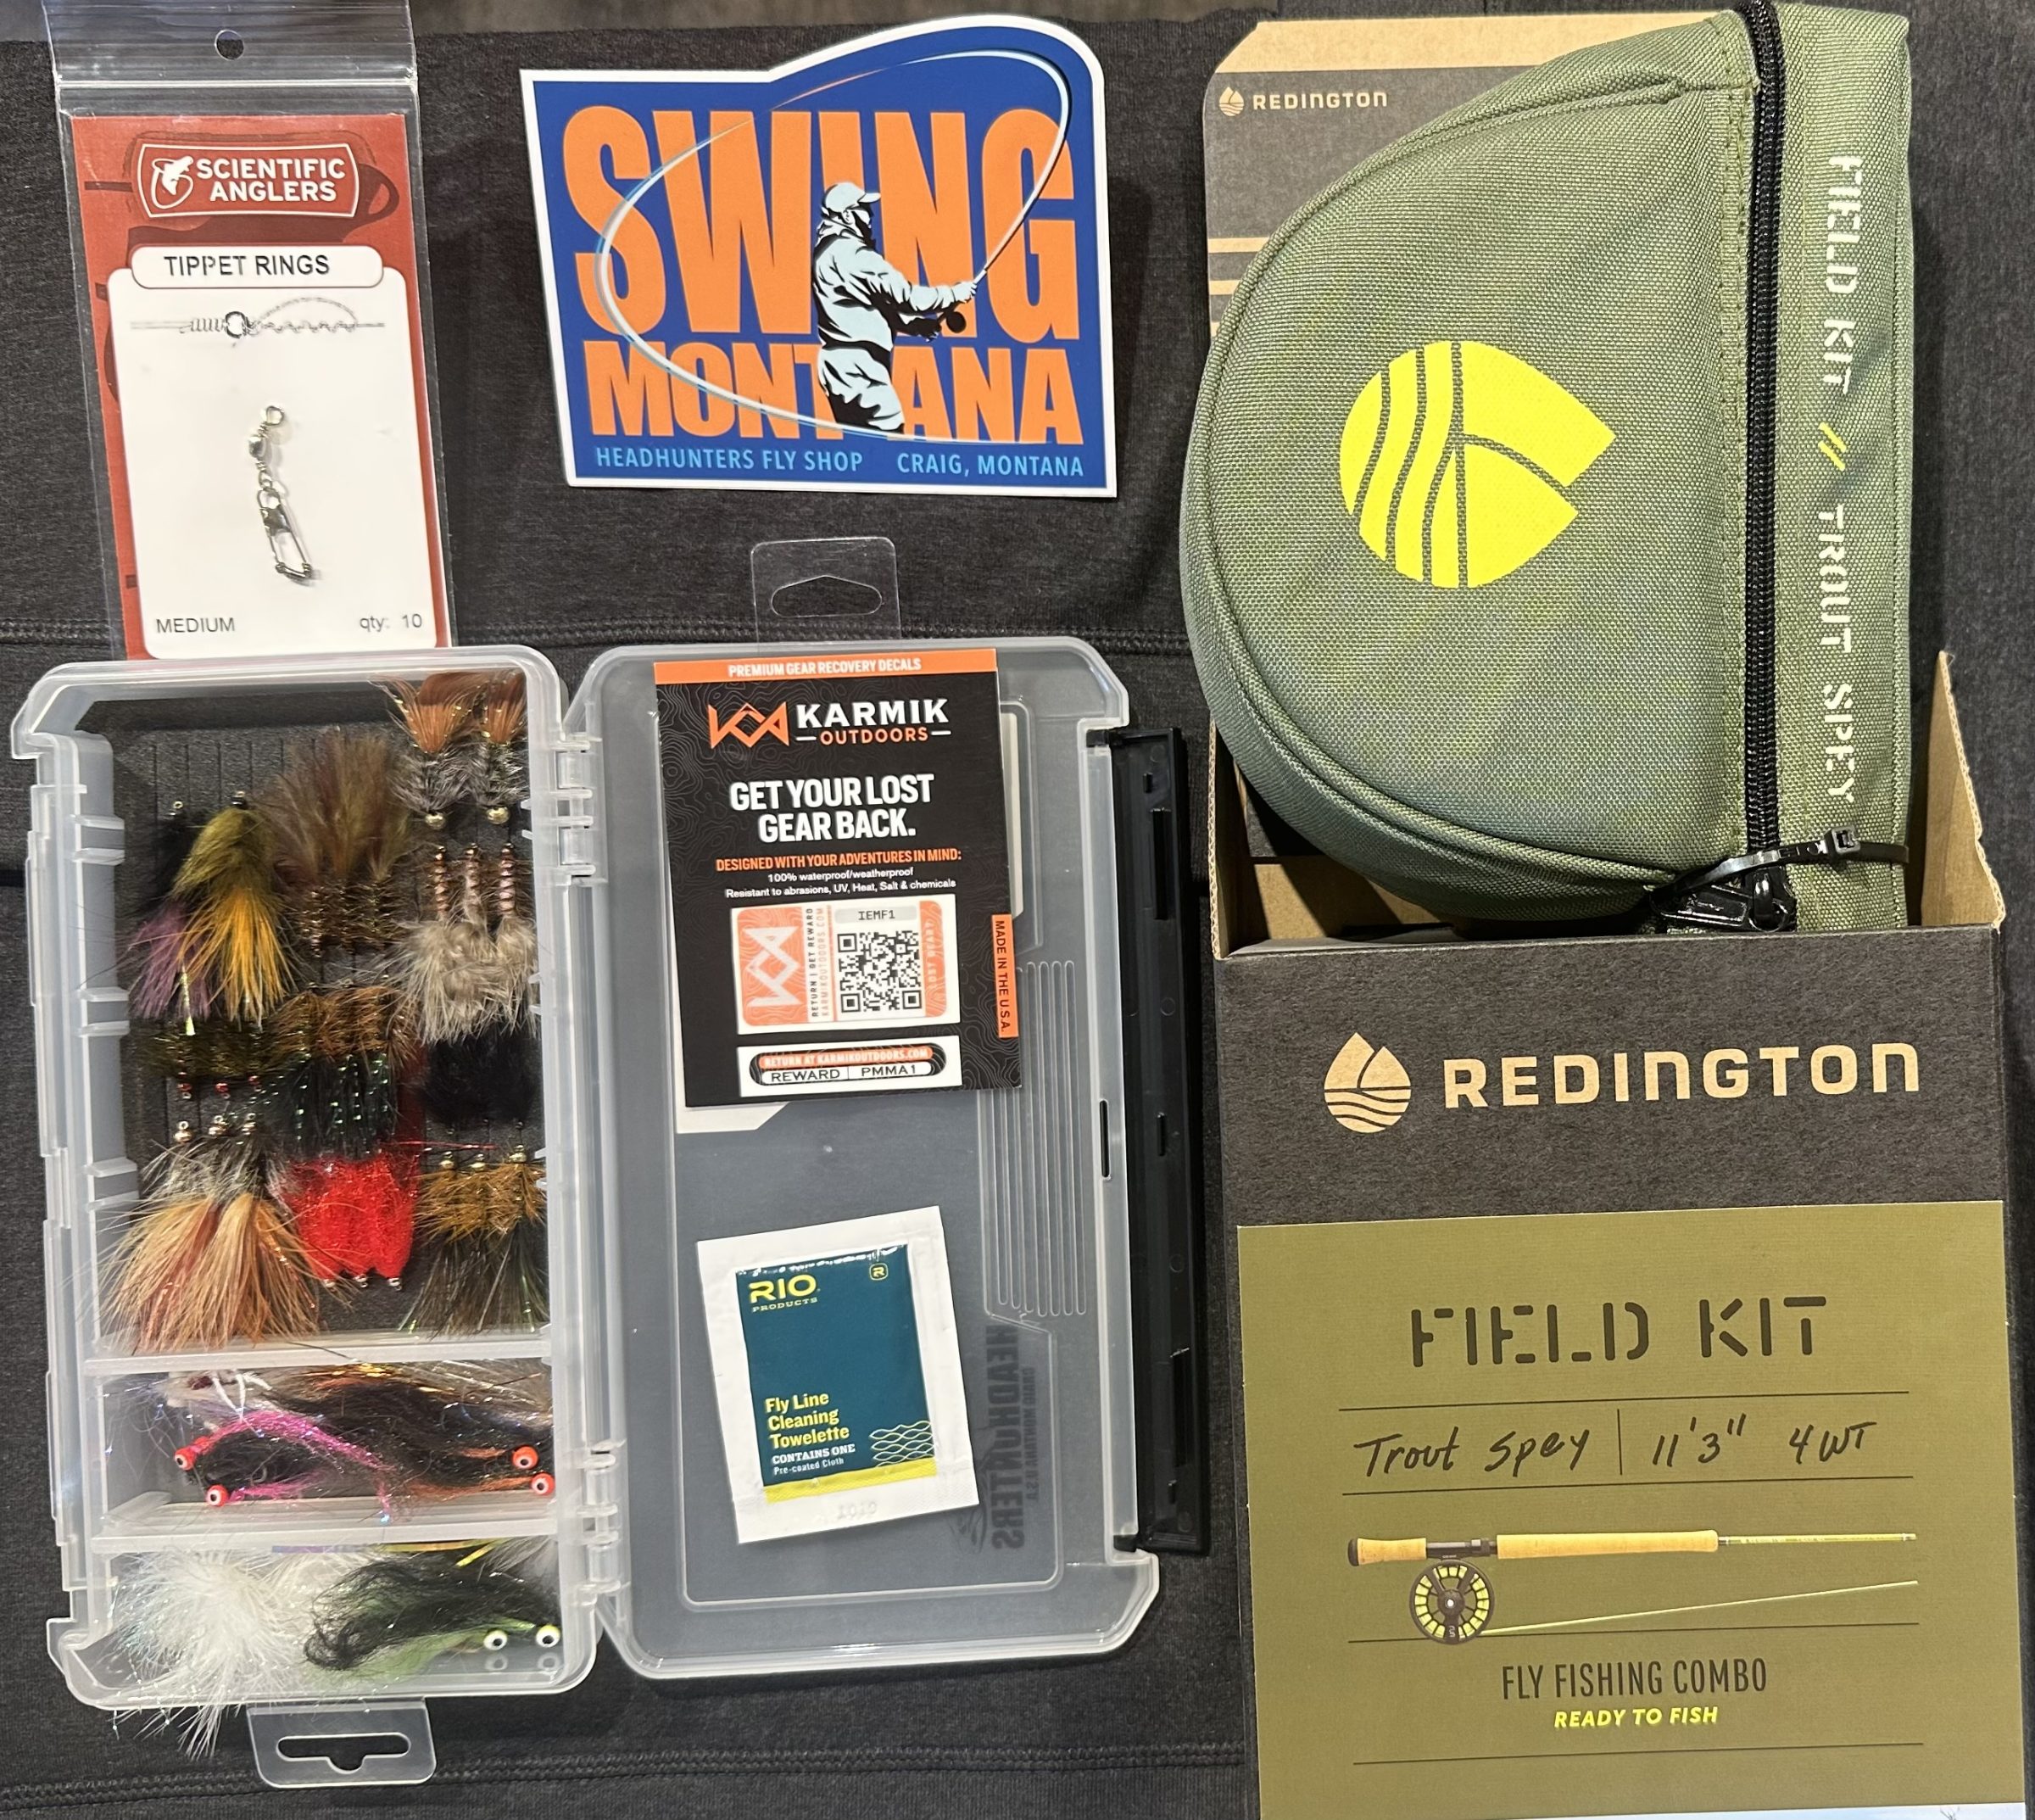 Redington Trout Spey Field Kit w/ Bonus Fly Box - Headhunters Fly Shop